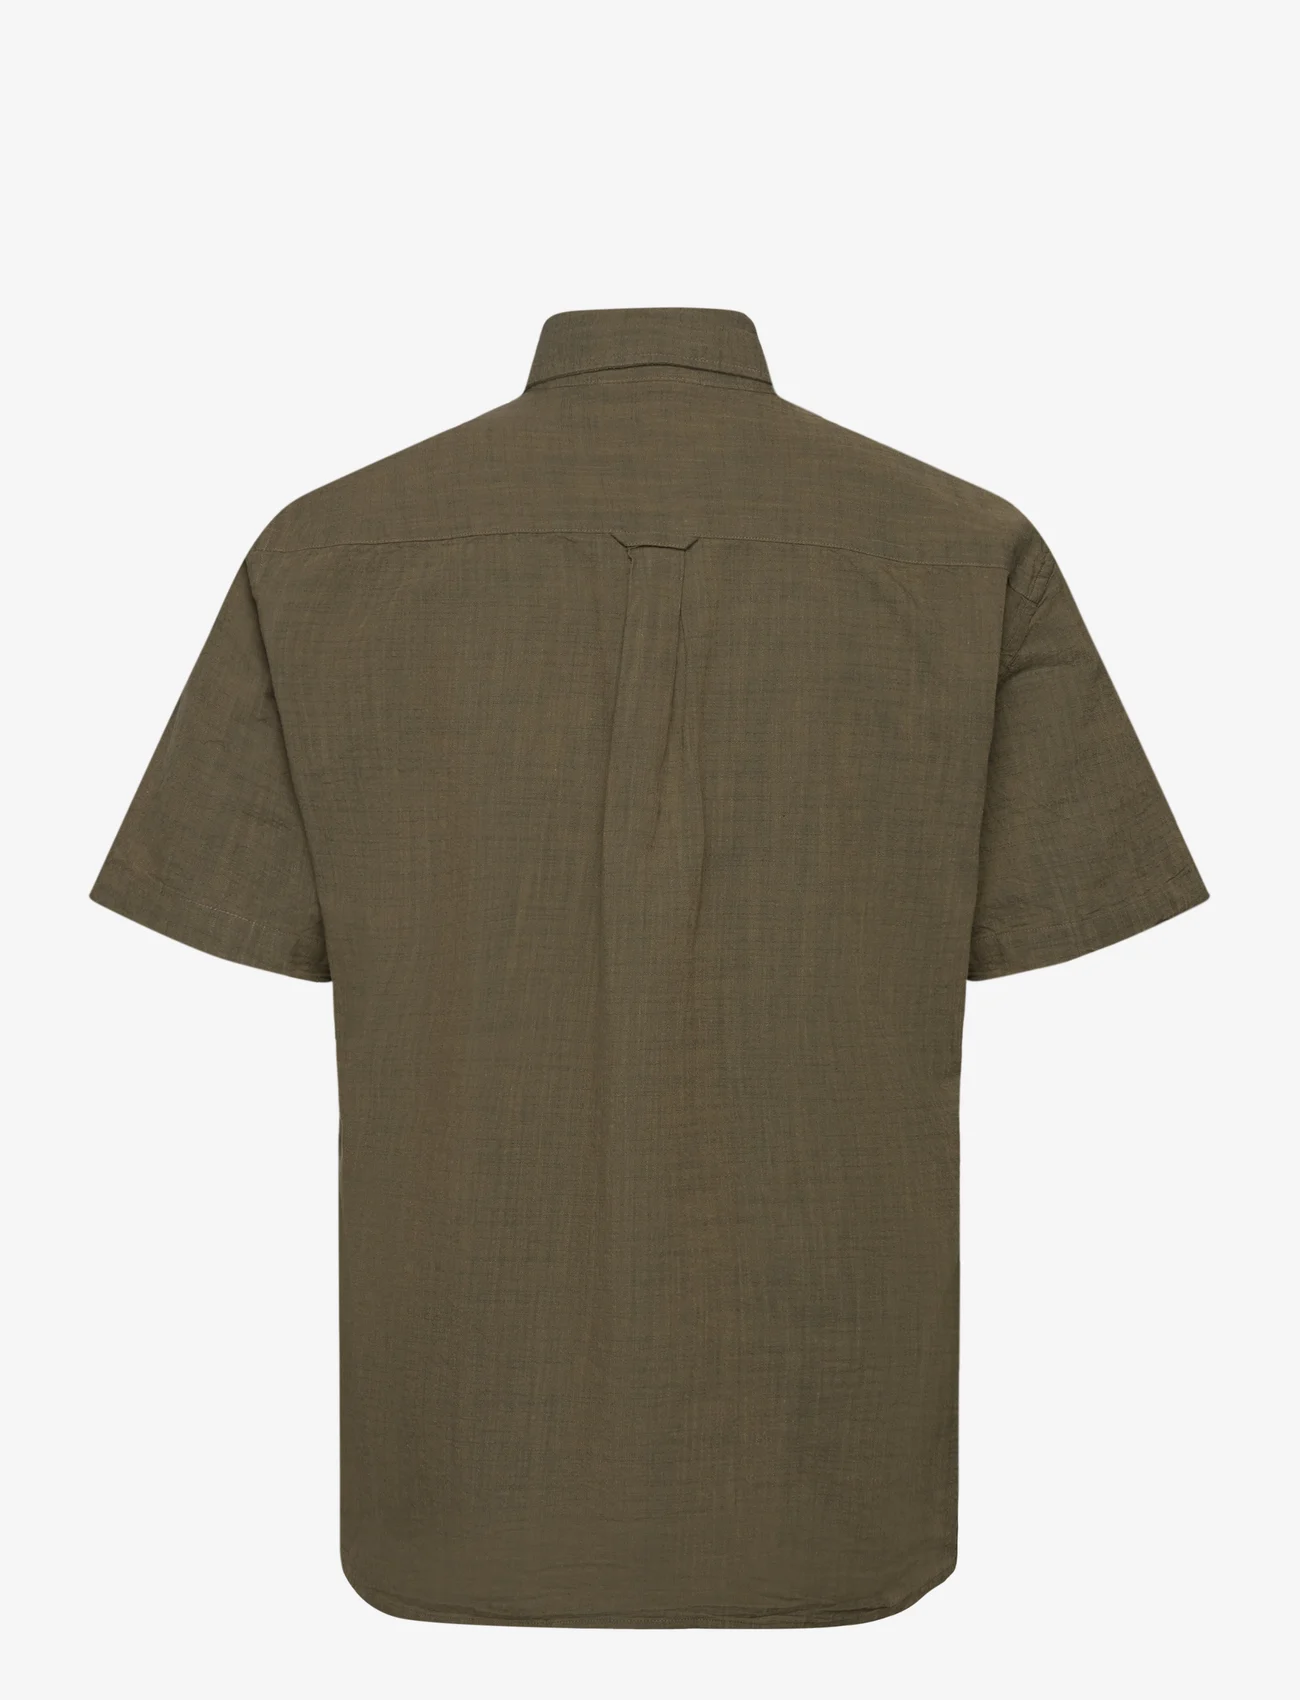 Knowledge Cotton Apparel - Regular linen look short sleeve shi - kurzärmelig - burned olive - 1